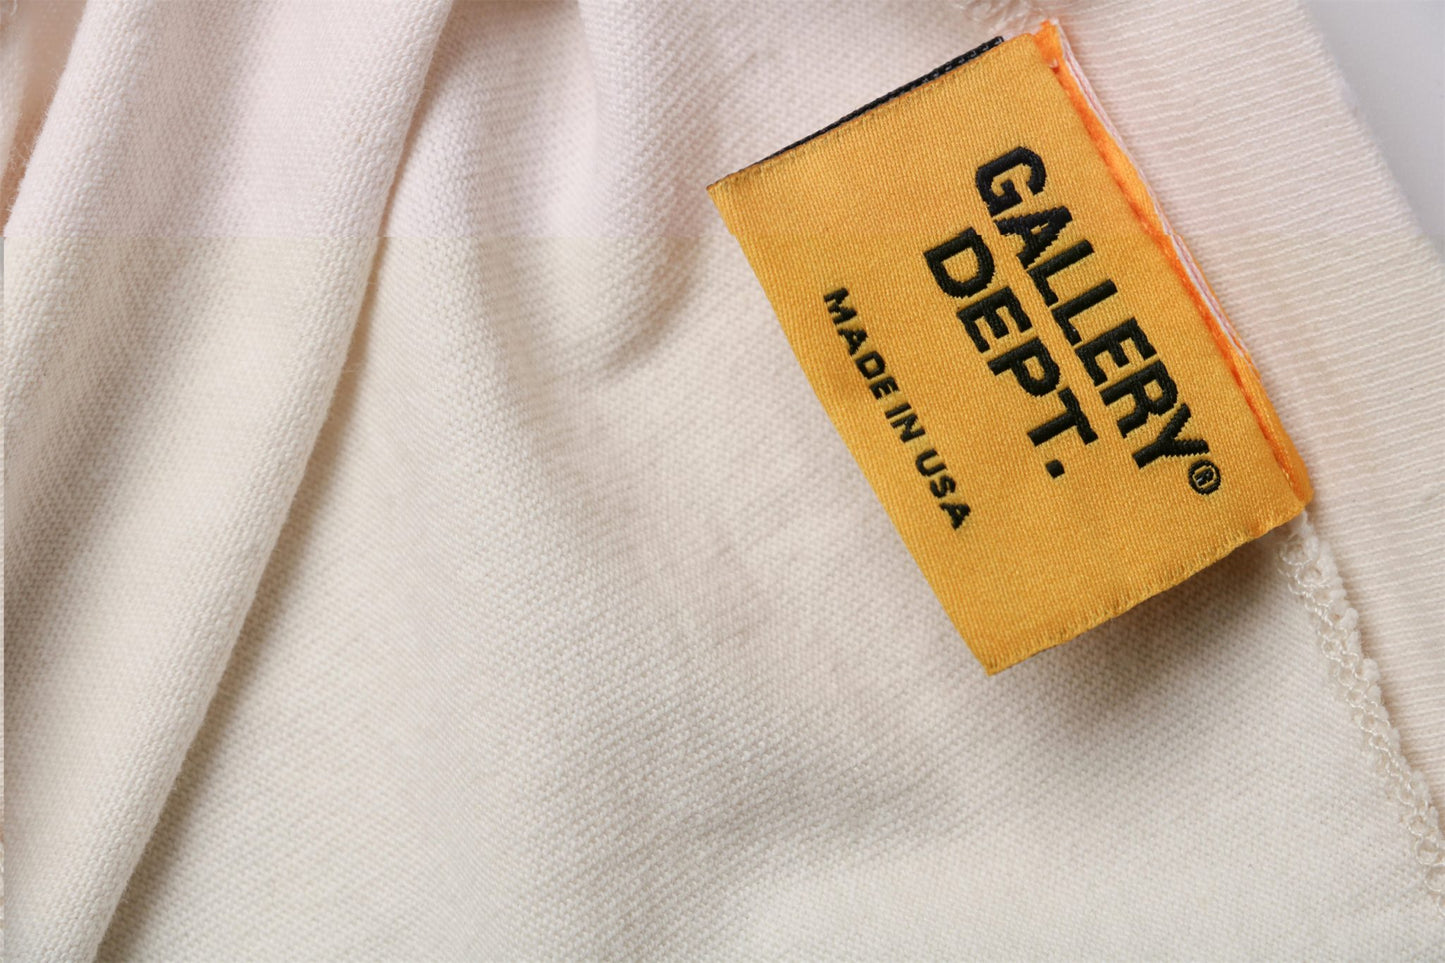 Gallery Dept Art That Kills Cream T-Shirt